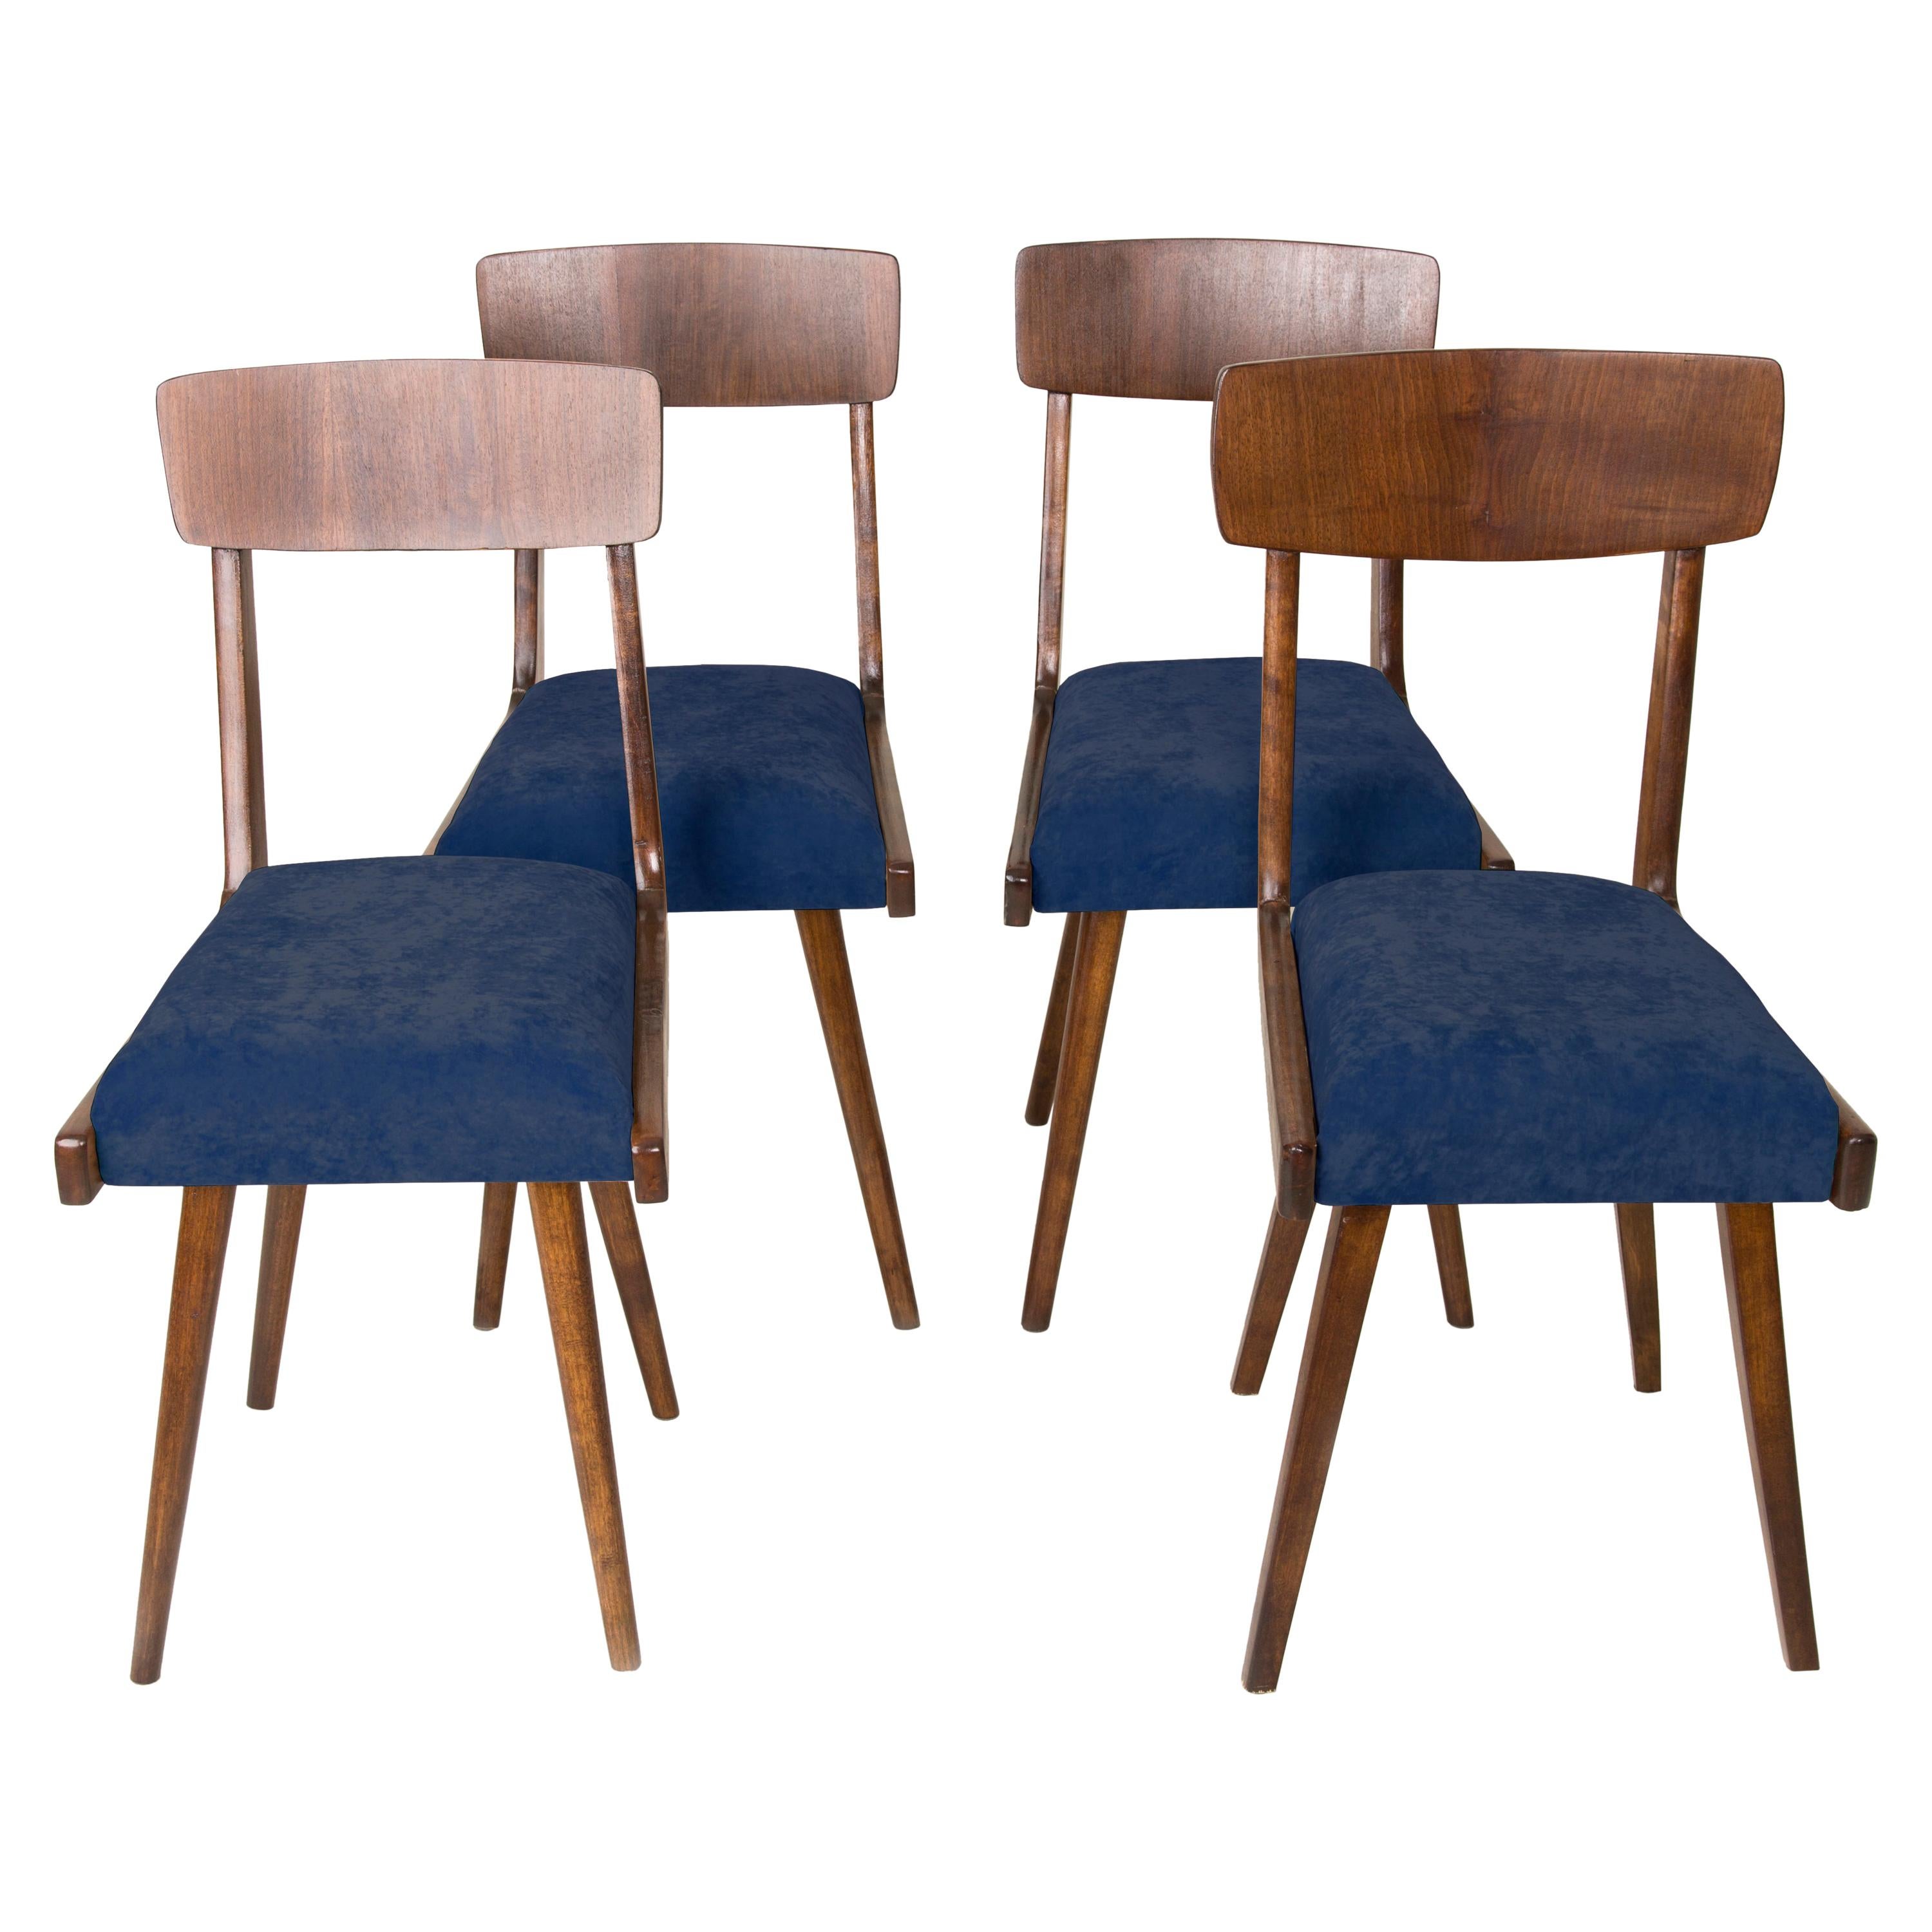 Set of Four Mid Century Navy Blue Velvet Wood Chairs, Europe, 1960s